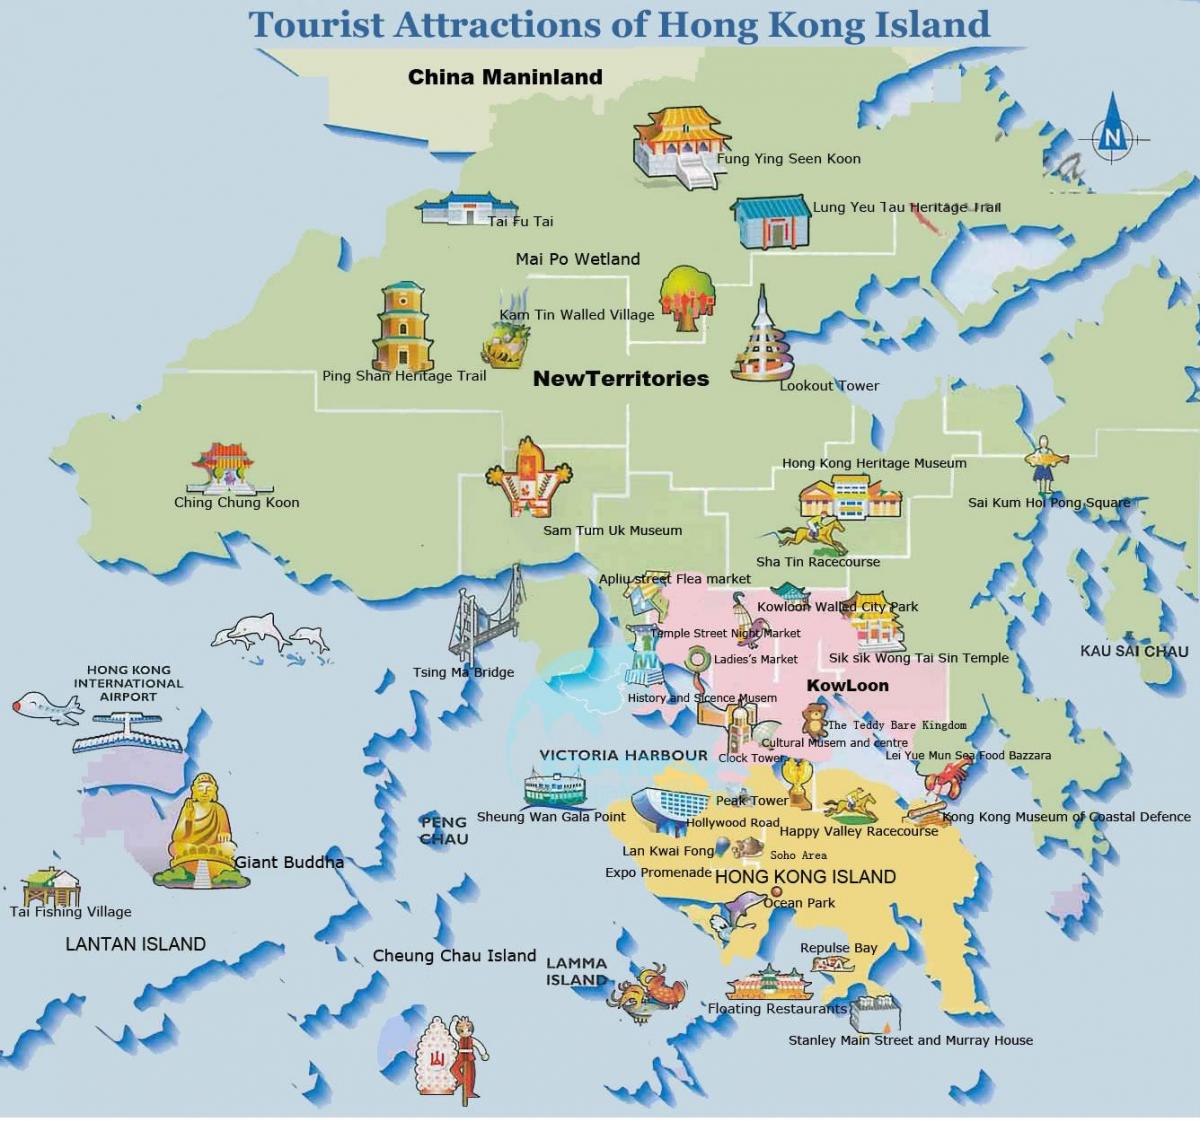 térkép Hong Kong sziget